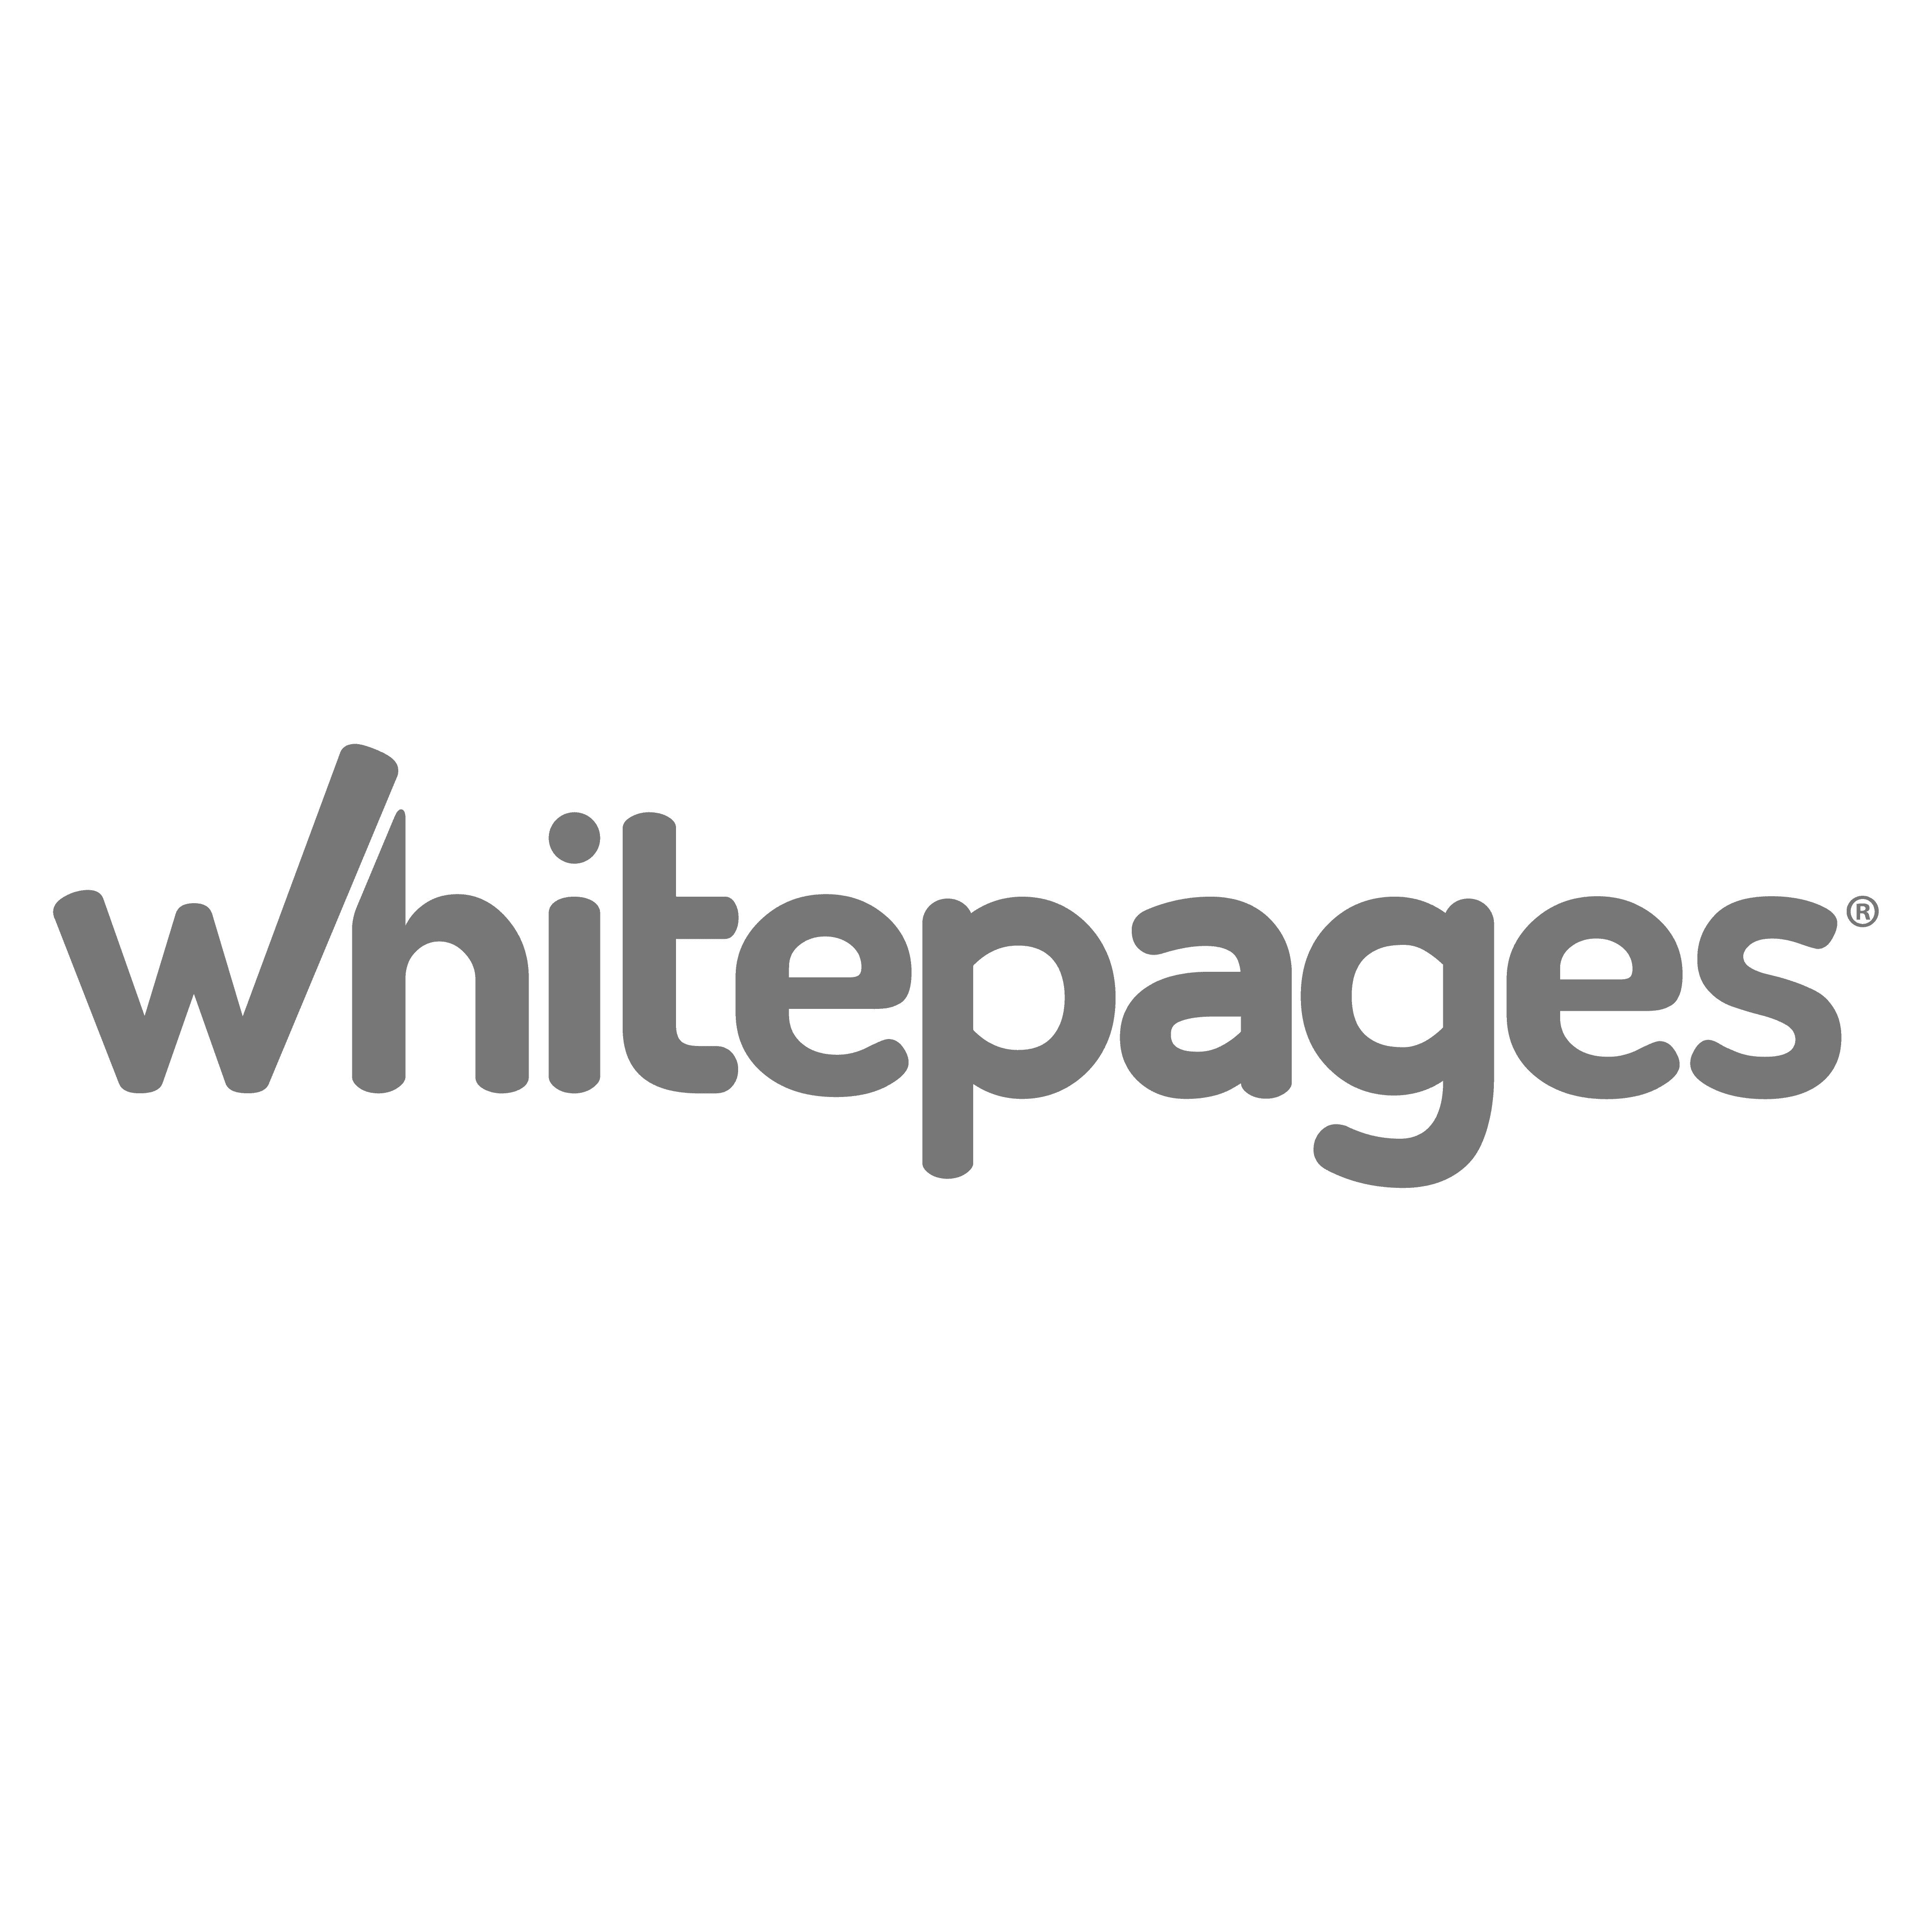 Whitepages Logo png